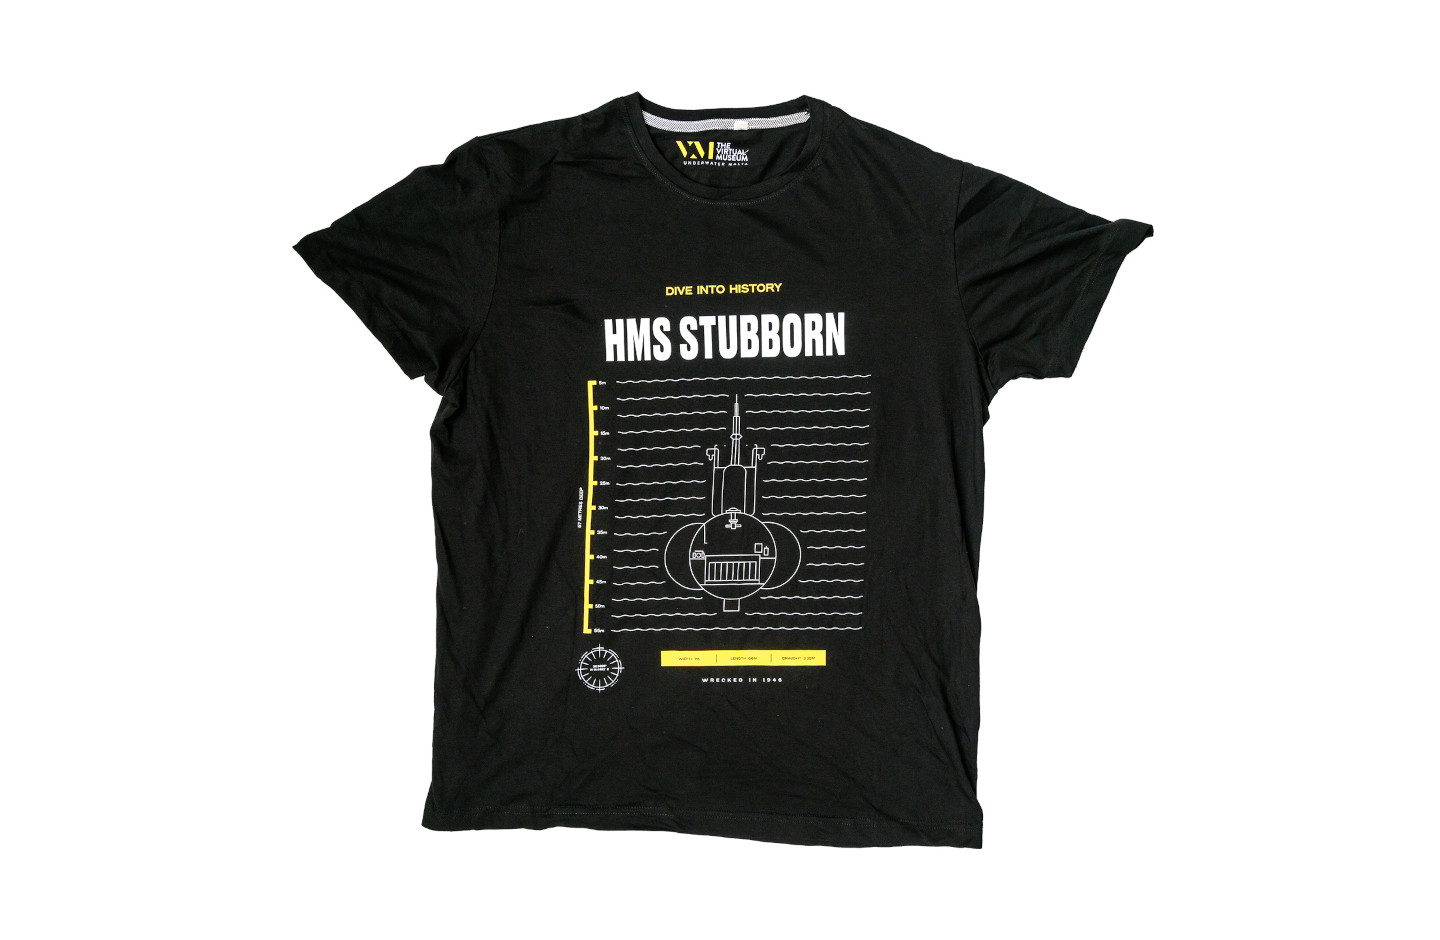 T-Shirts: Dive Into History – HMS Stubborn